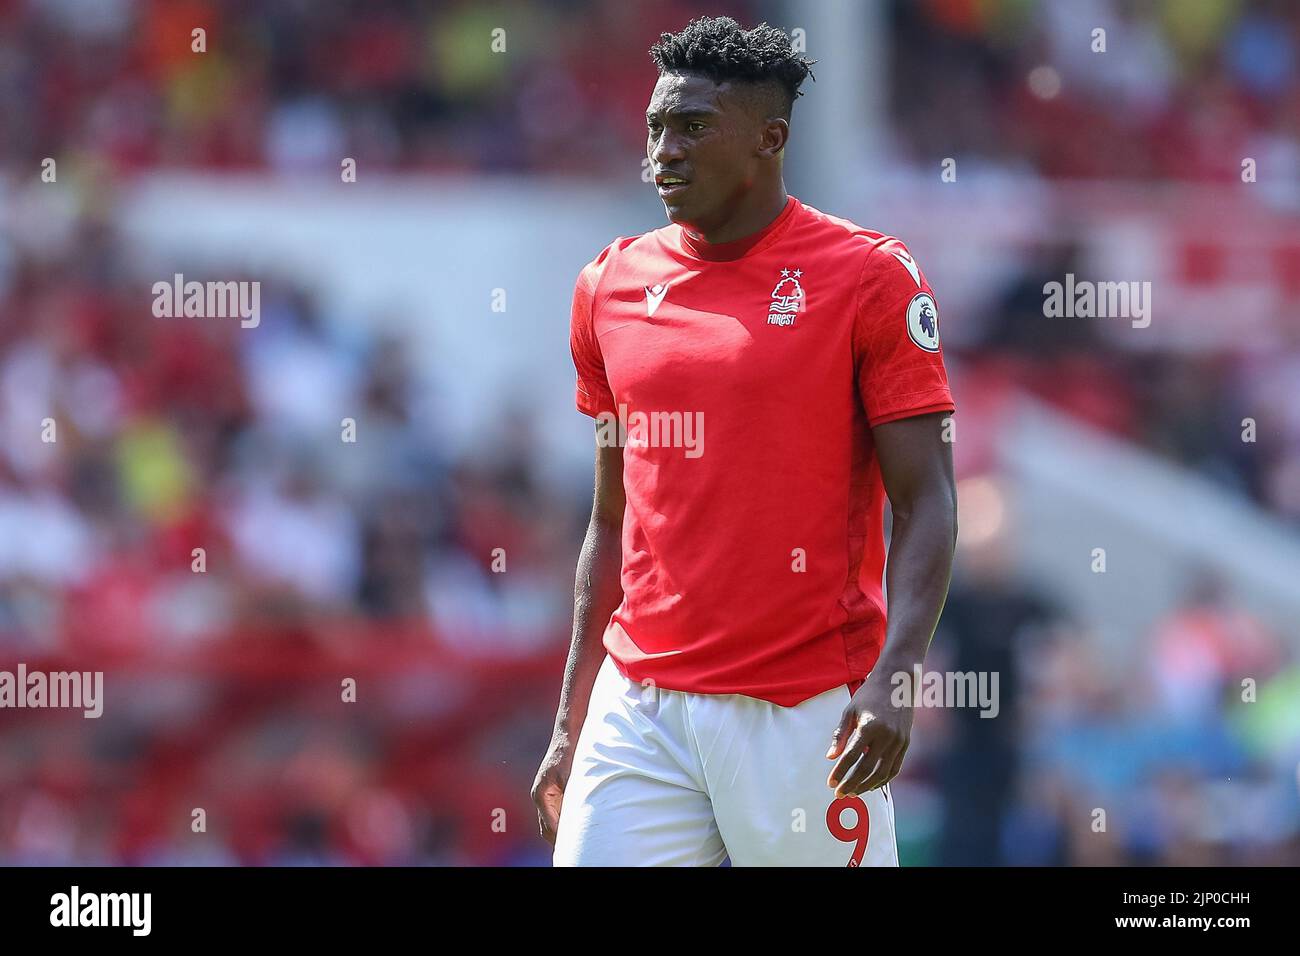 Taiwo Awoniyi #9 of Nottingham Forest during the game Stock Photo